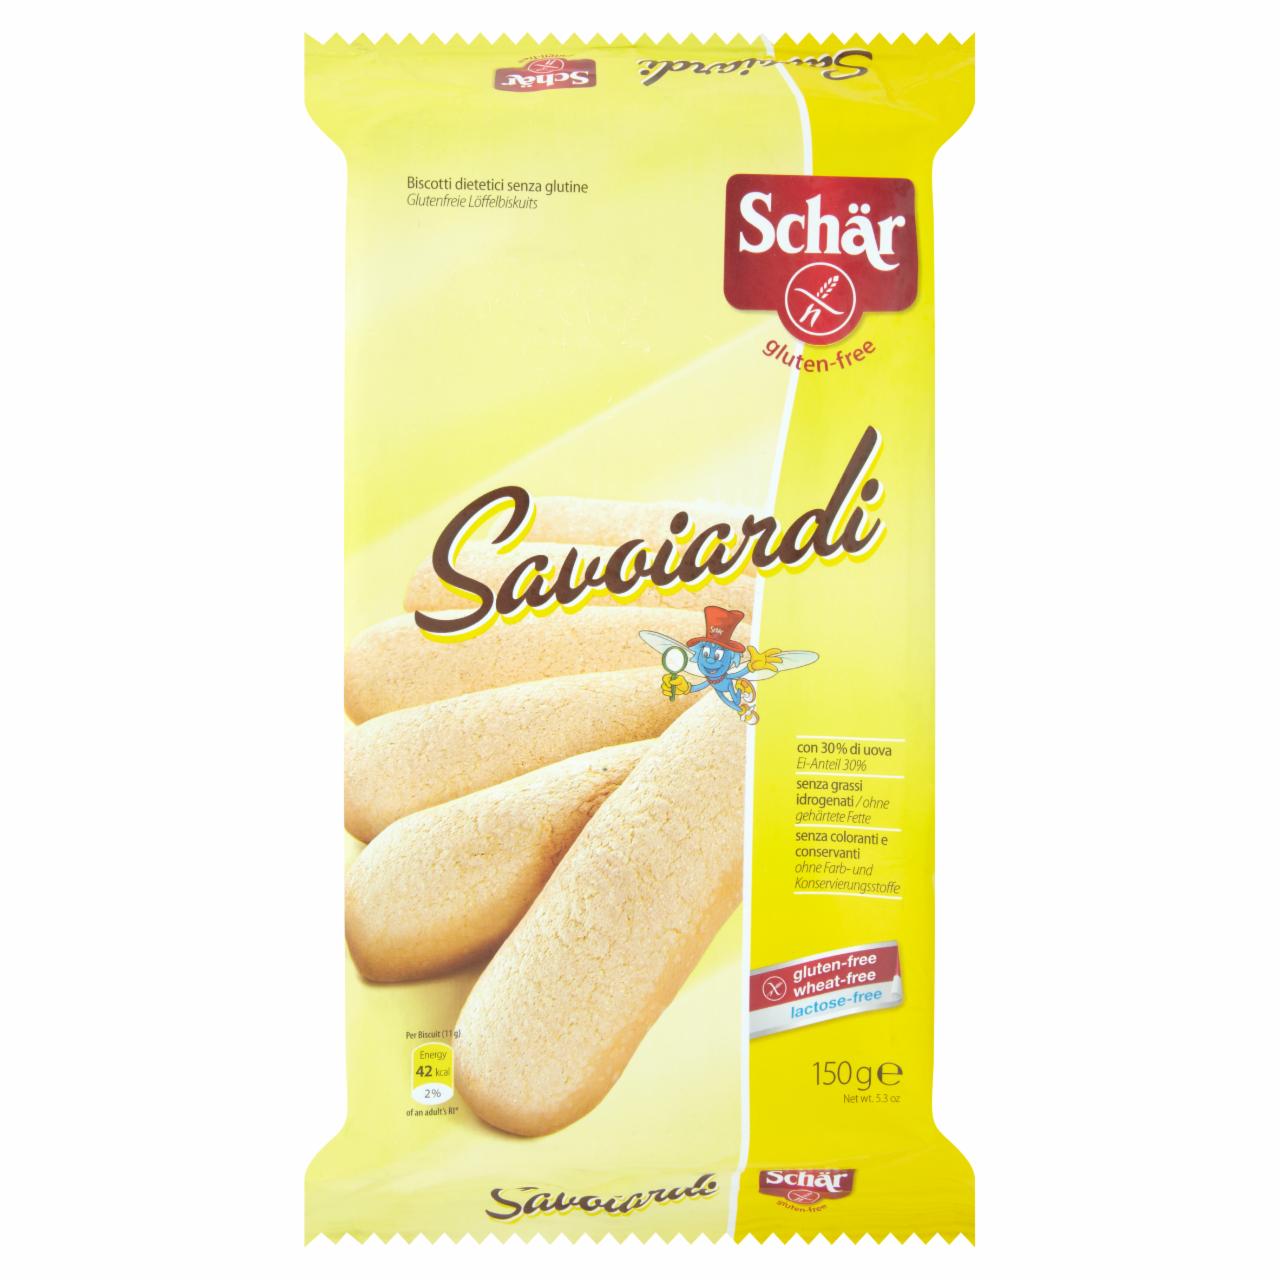 Képek - Schär Savoiardi gluténmentes piskóta 150 g